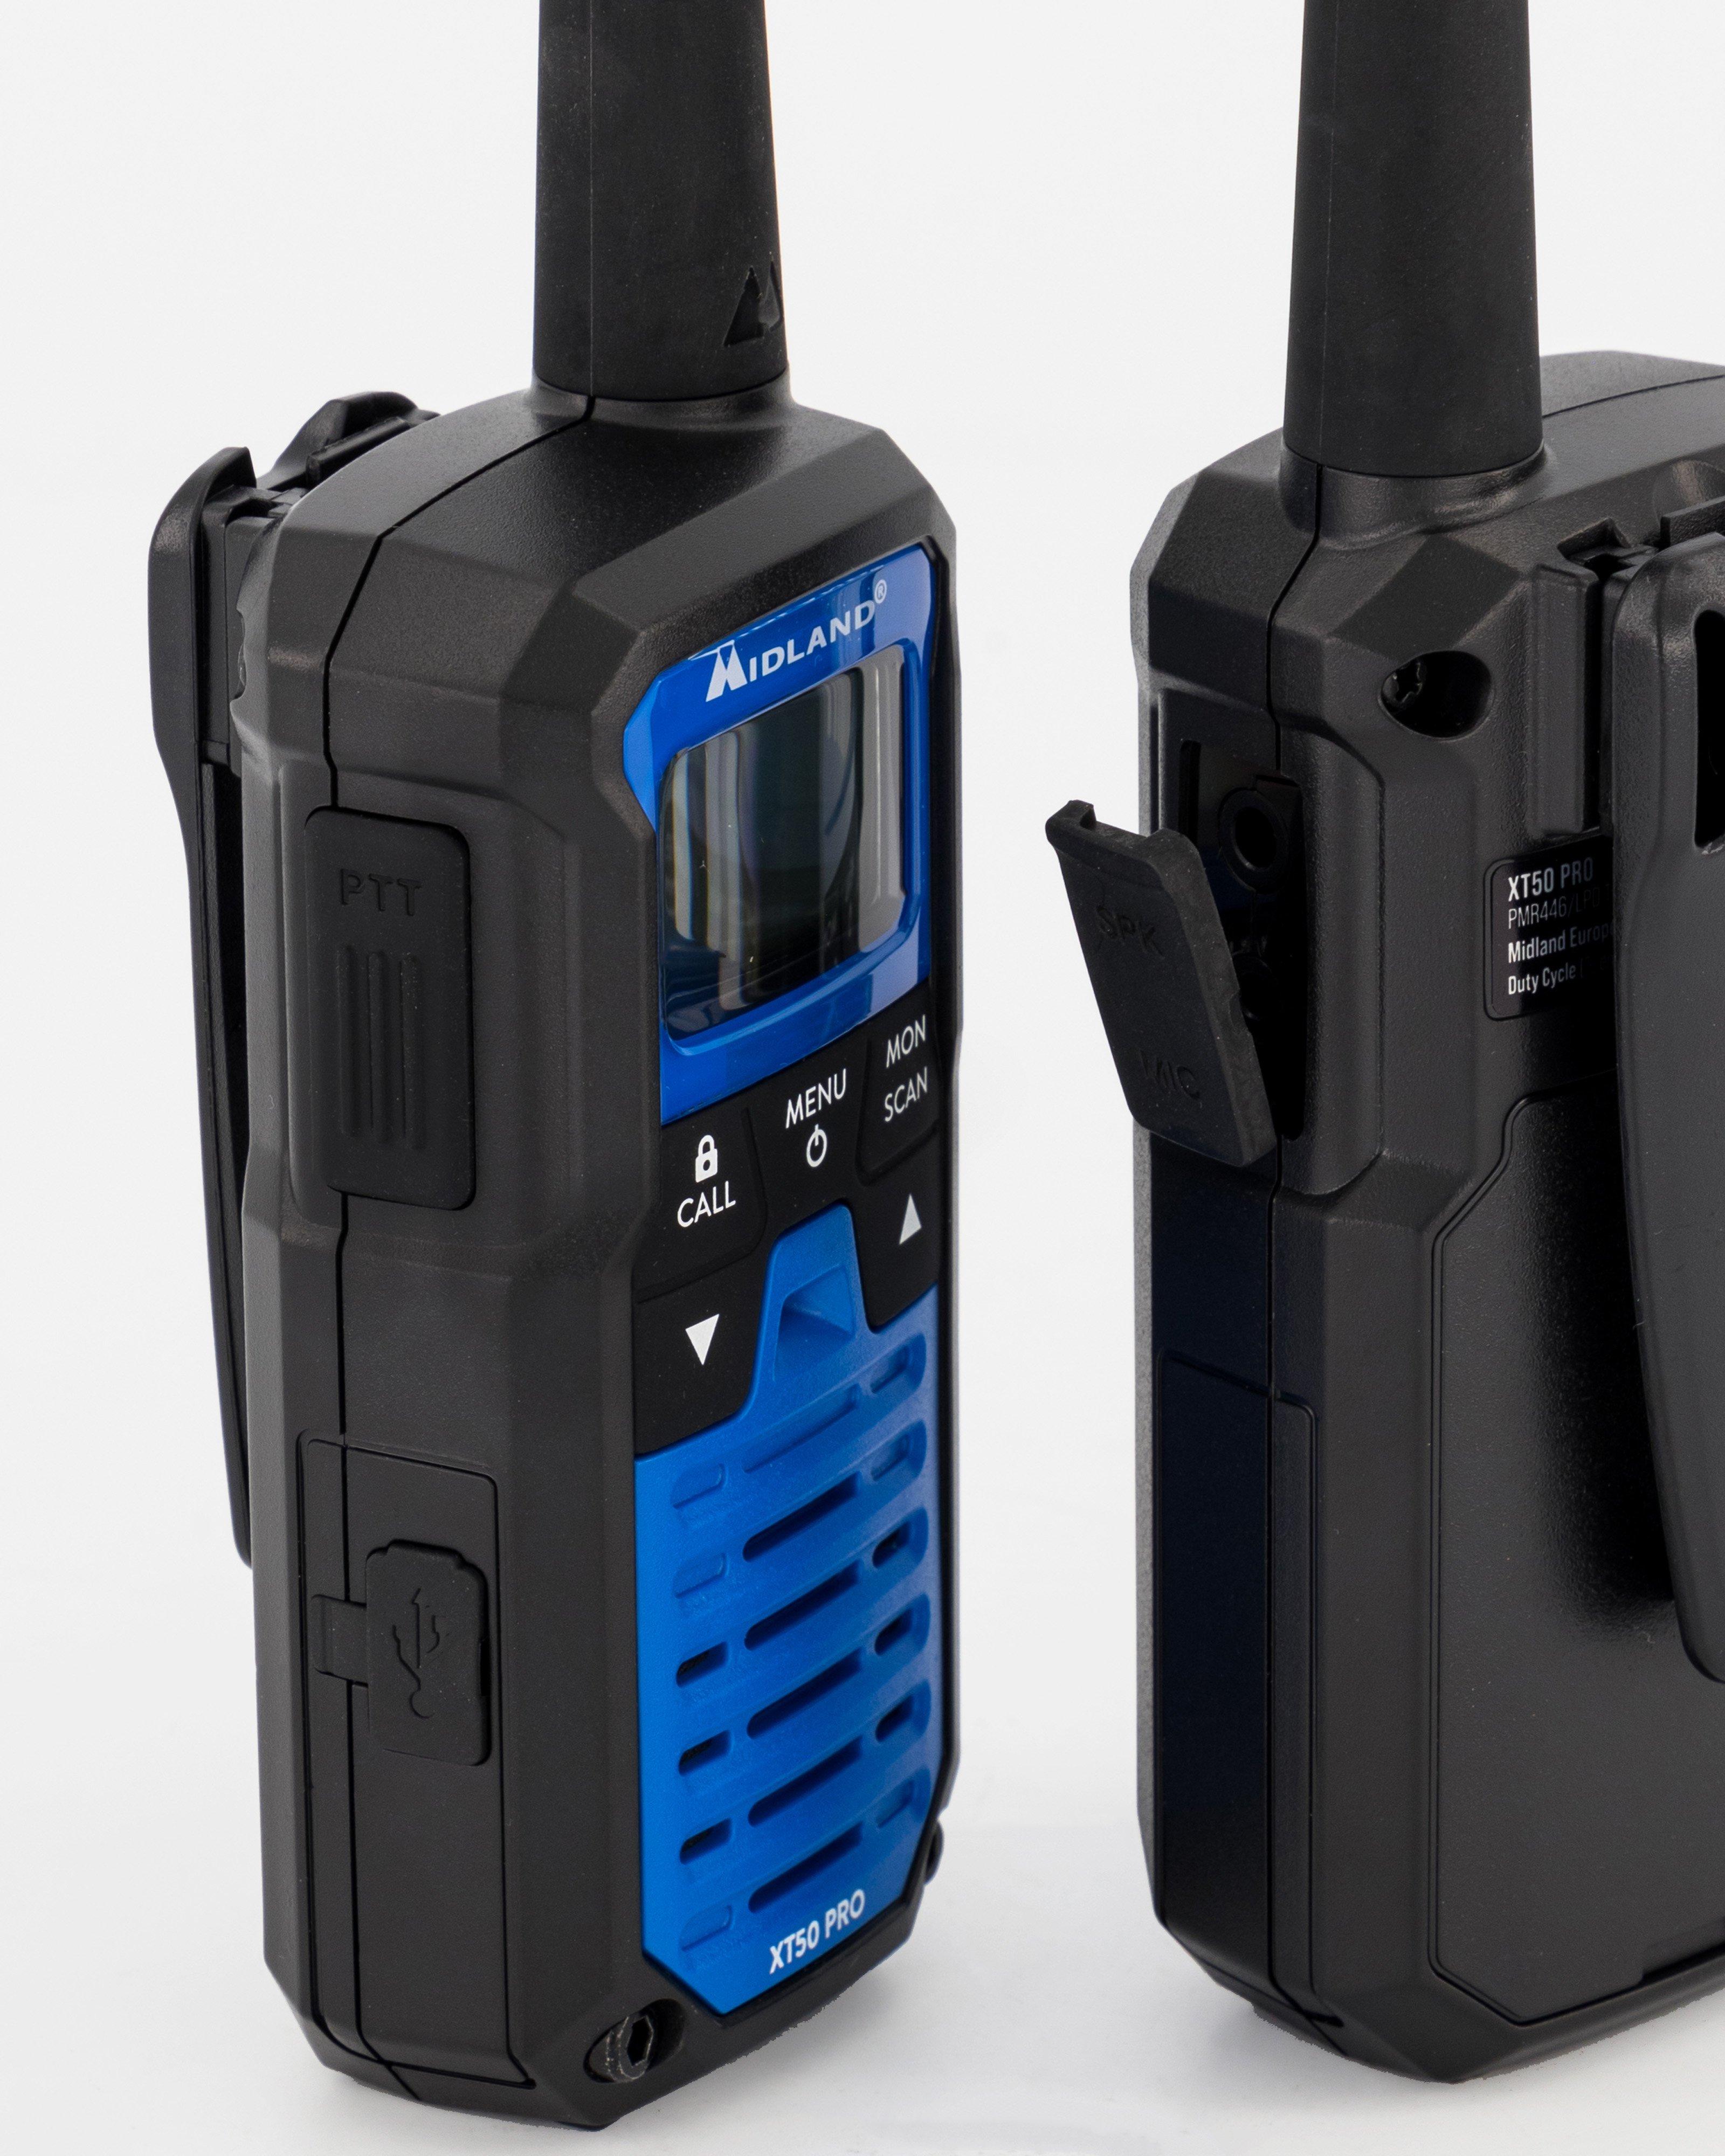 Midland XT50 Pro Two-Way Radios -  Blue